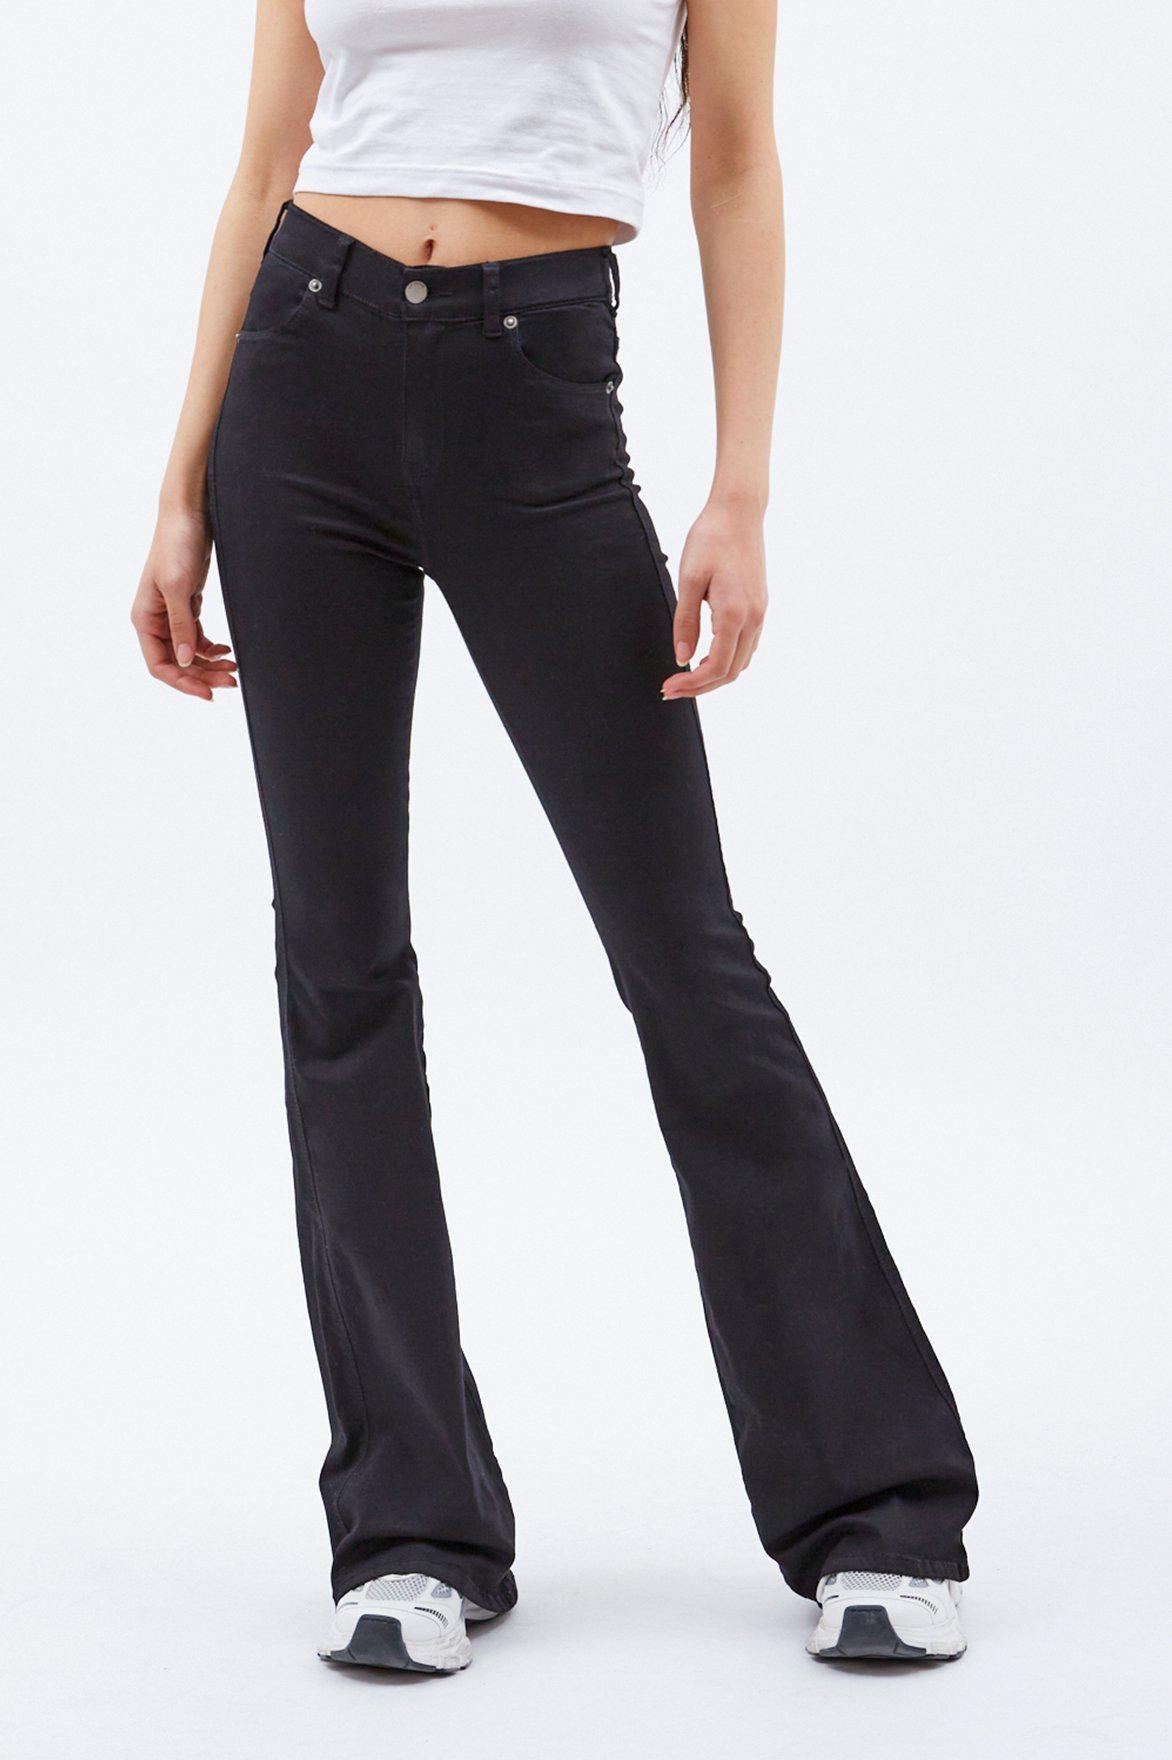 Regular Ladies Bell Bottom Denim Black Jeans, Button at Rs 395